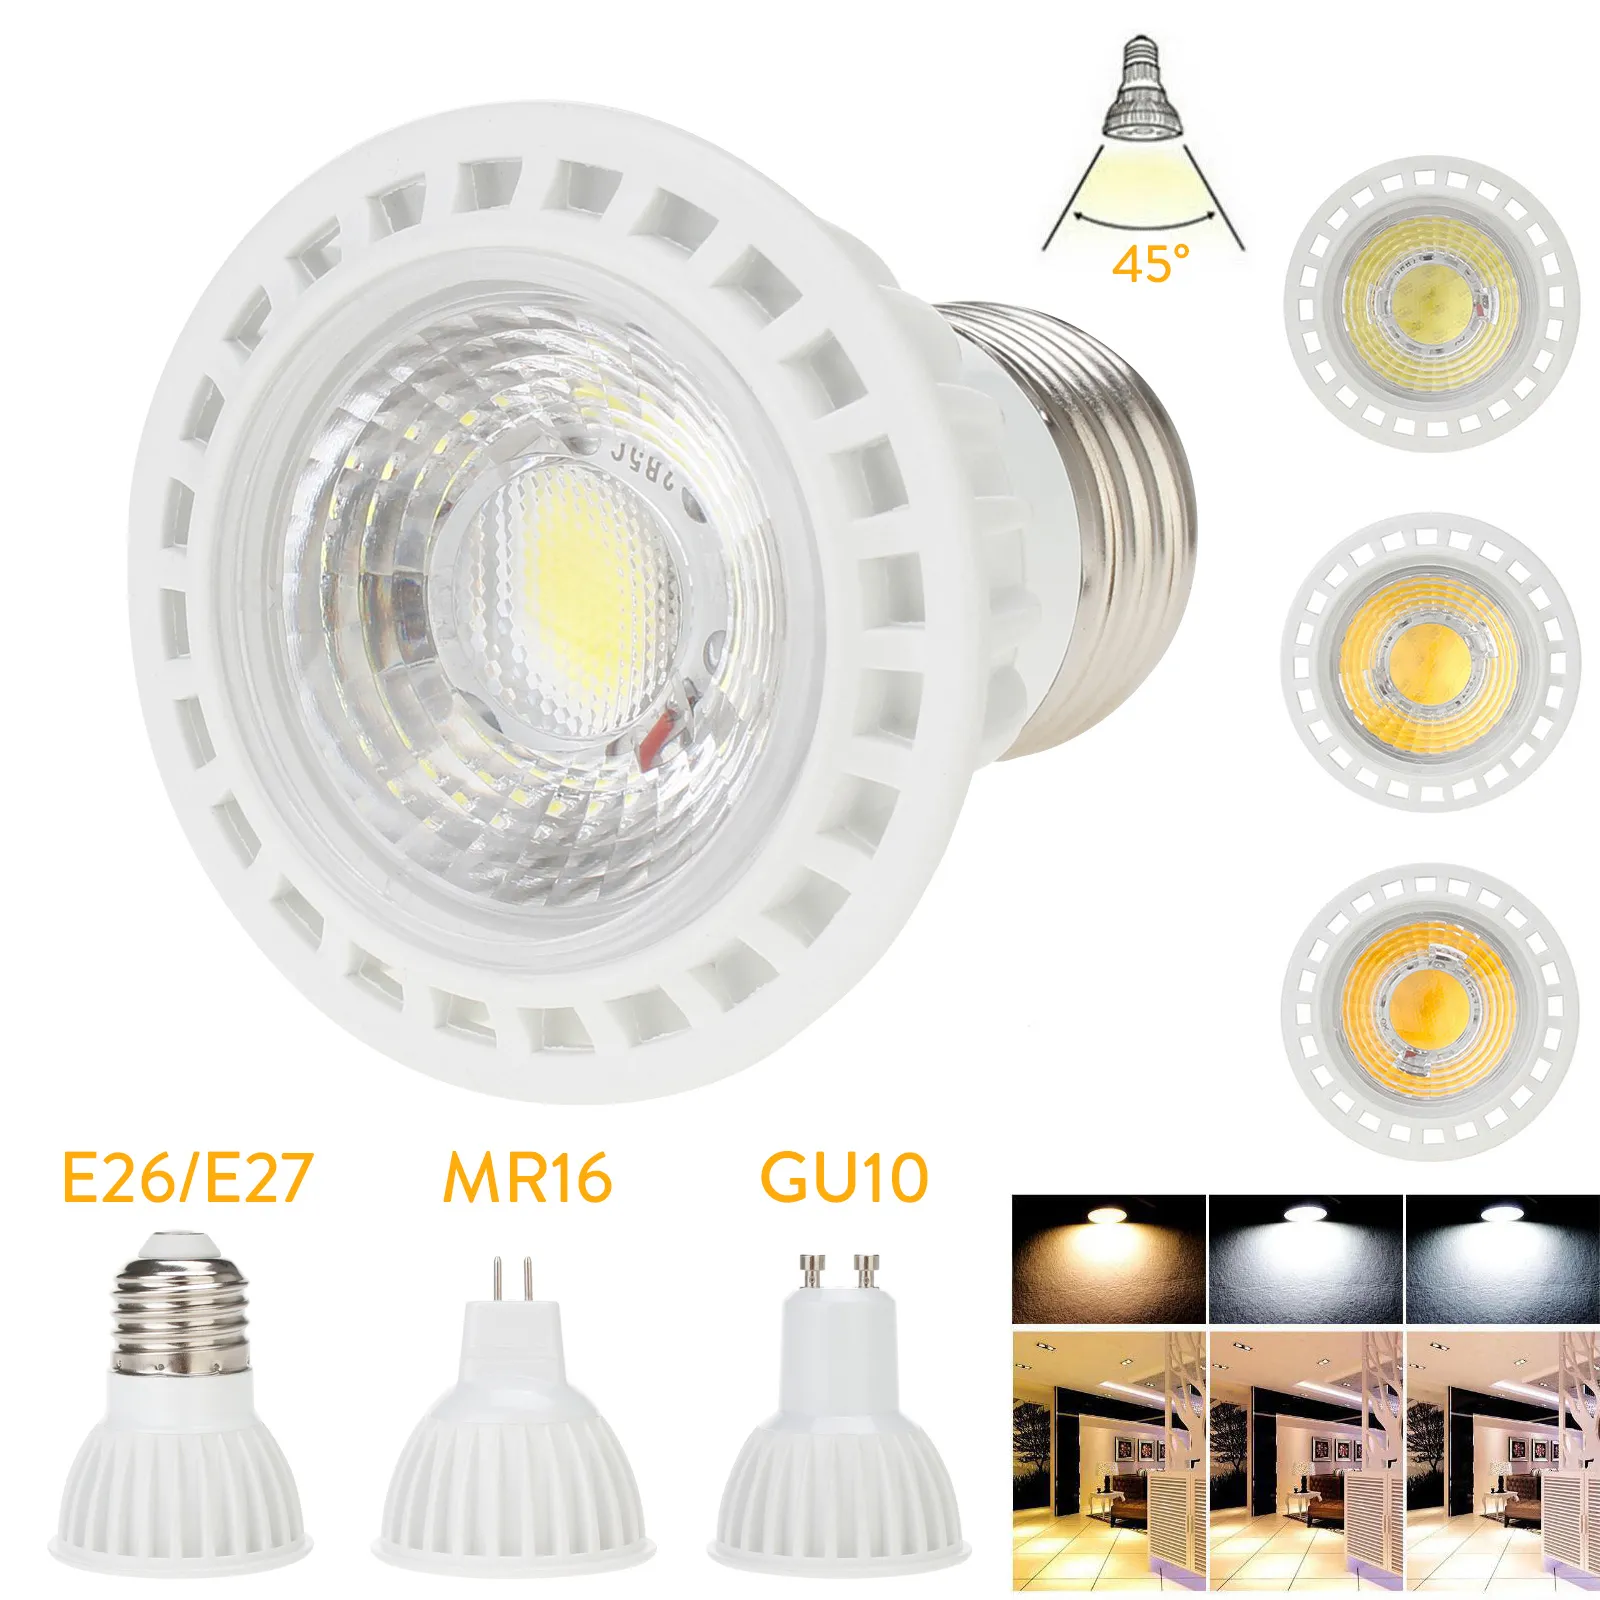 MR16 glödlampor 110-240V Spotlights LED GU10 E27 Dimble Cob 9W med 12V LED-tak nedljus 550 lm varm naturlig cool vit ul energisparlampa